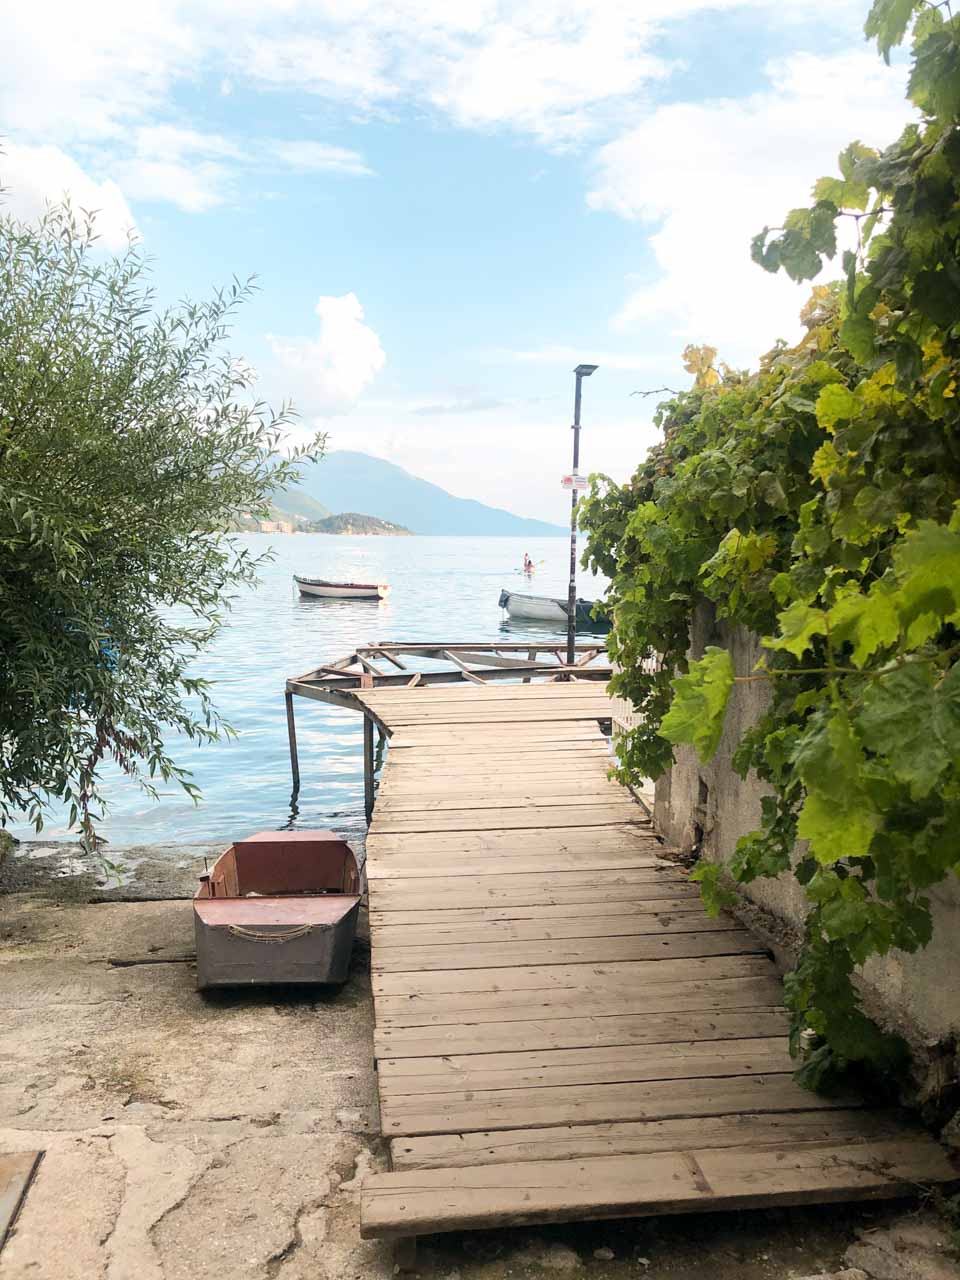 Entrance to the Ohrid Boardwalk